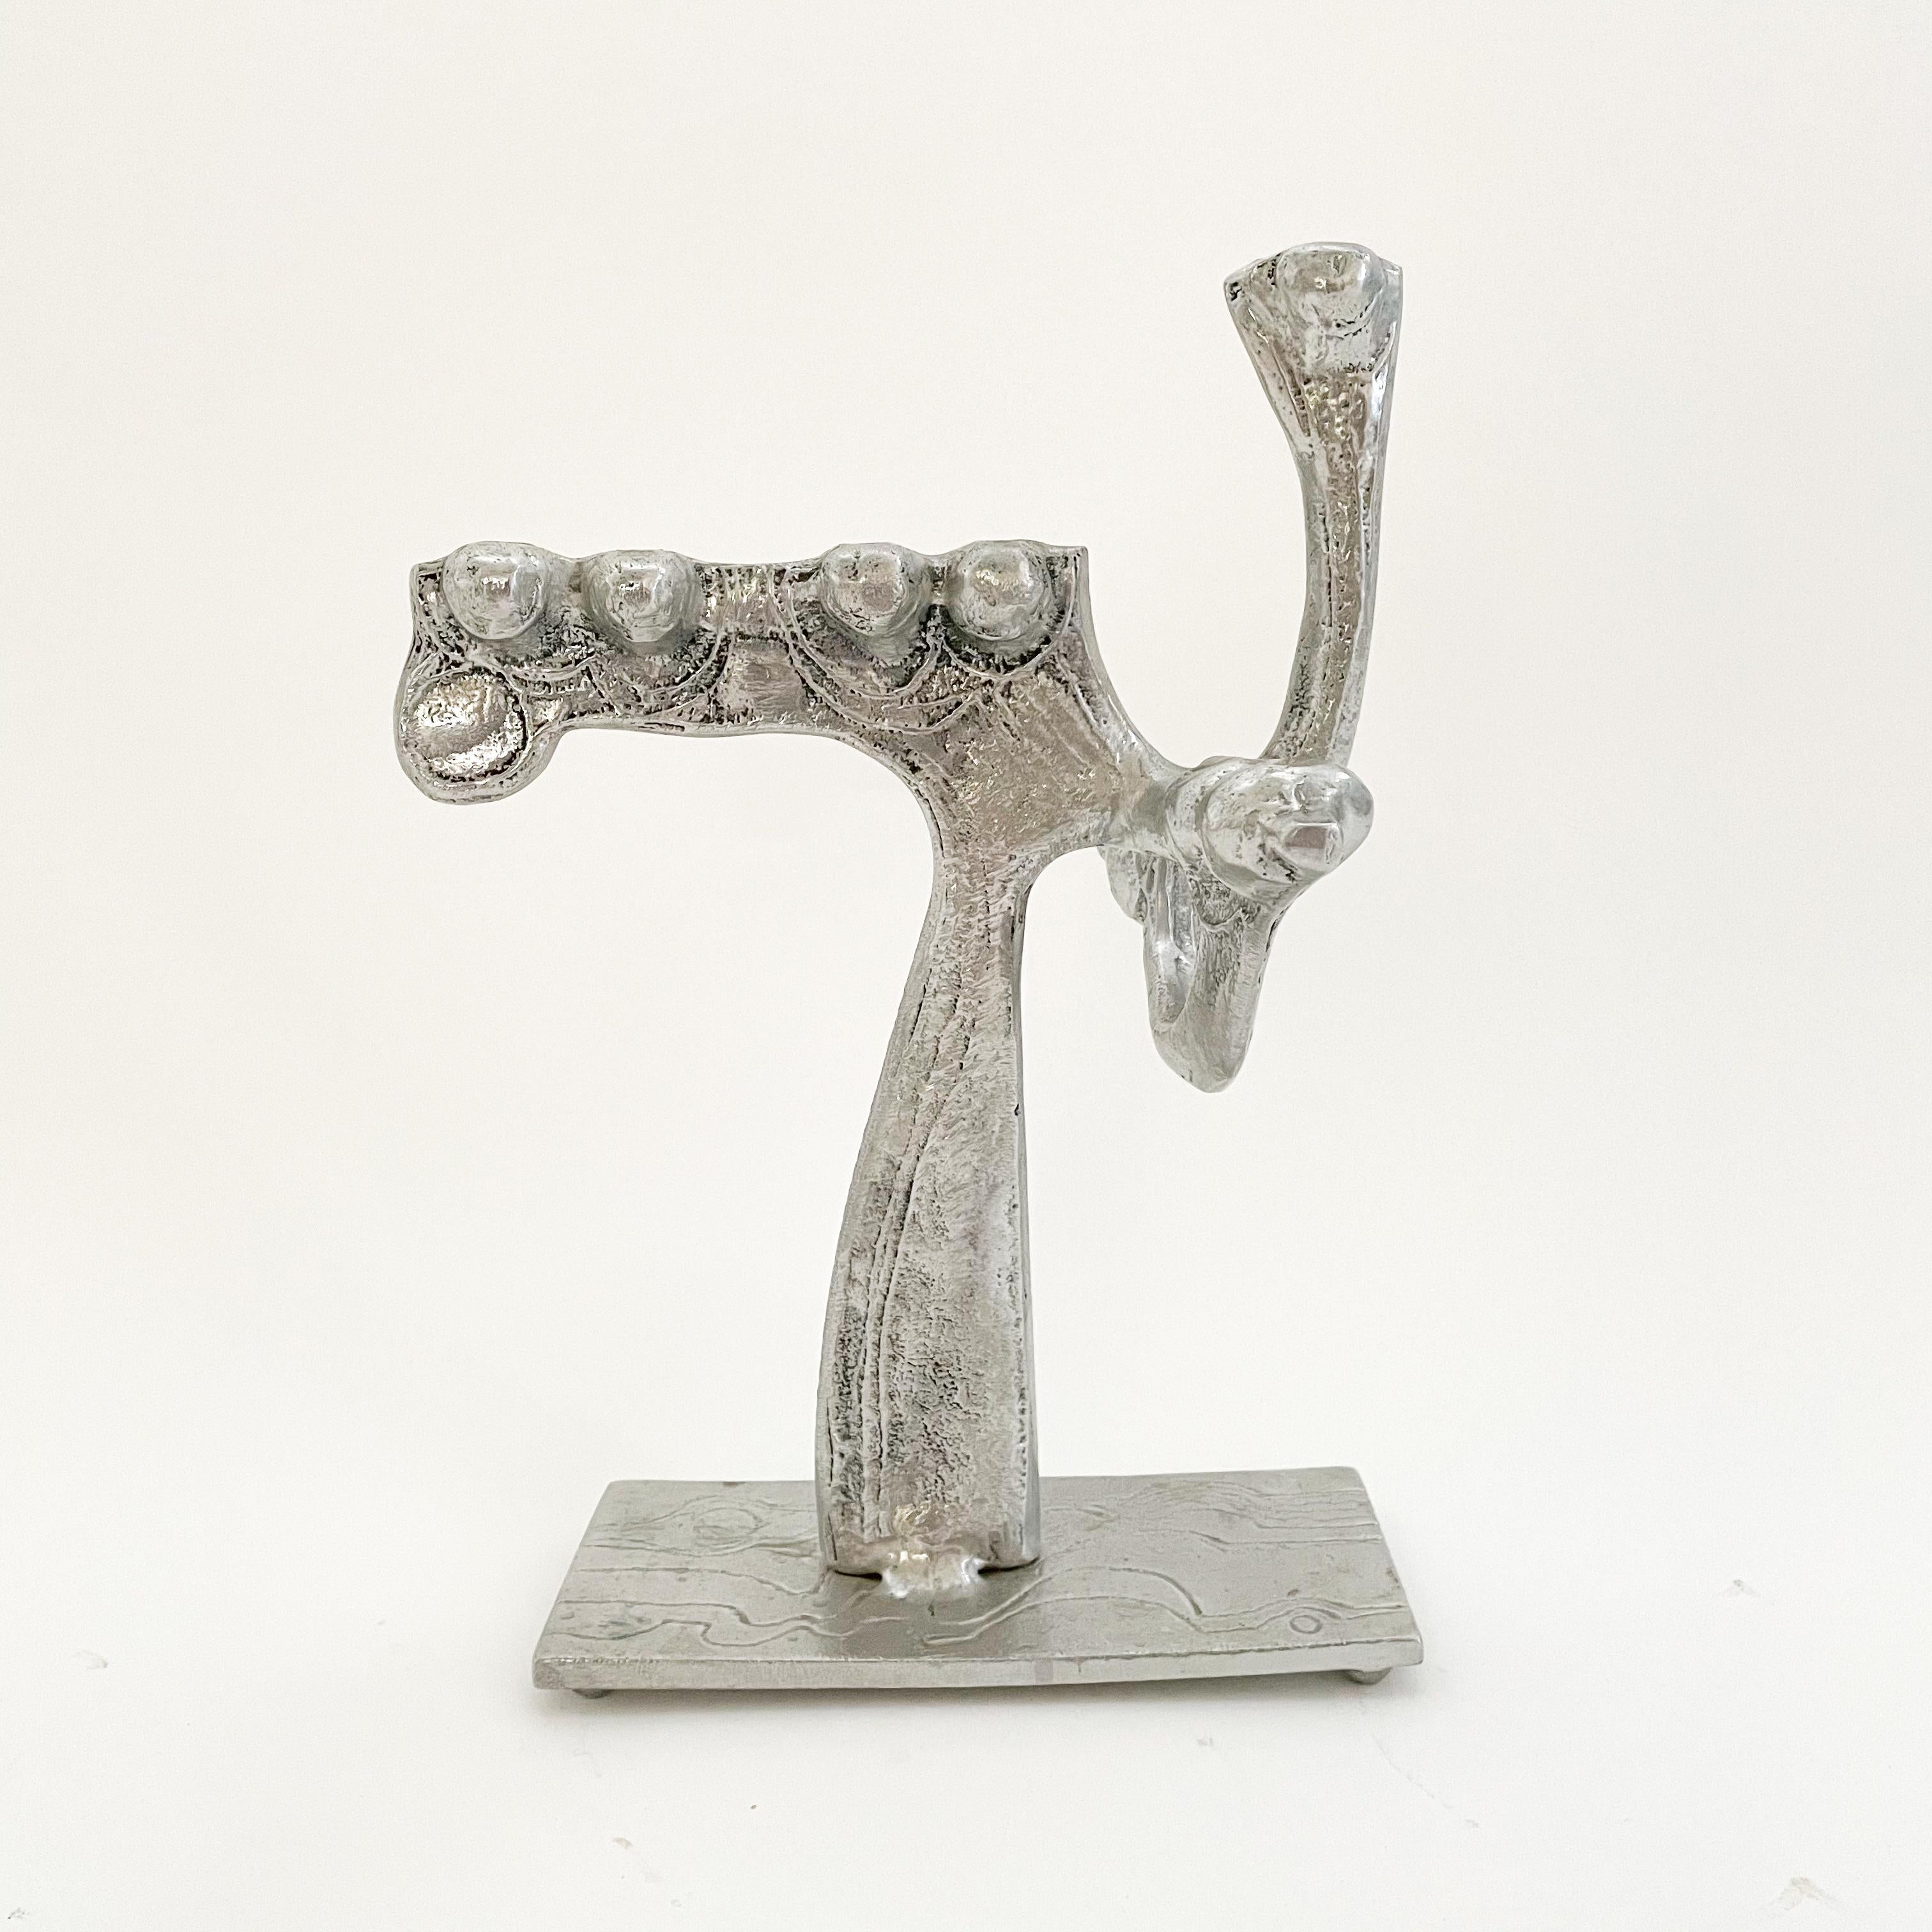 Brutalist aluminum menorah designed by artist Don Drumm's 